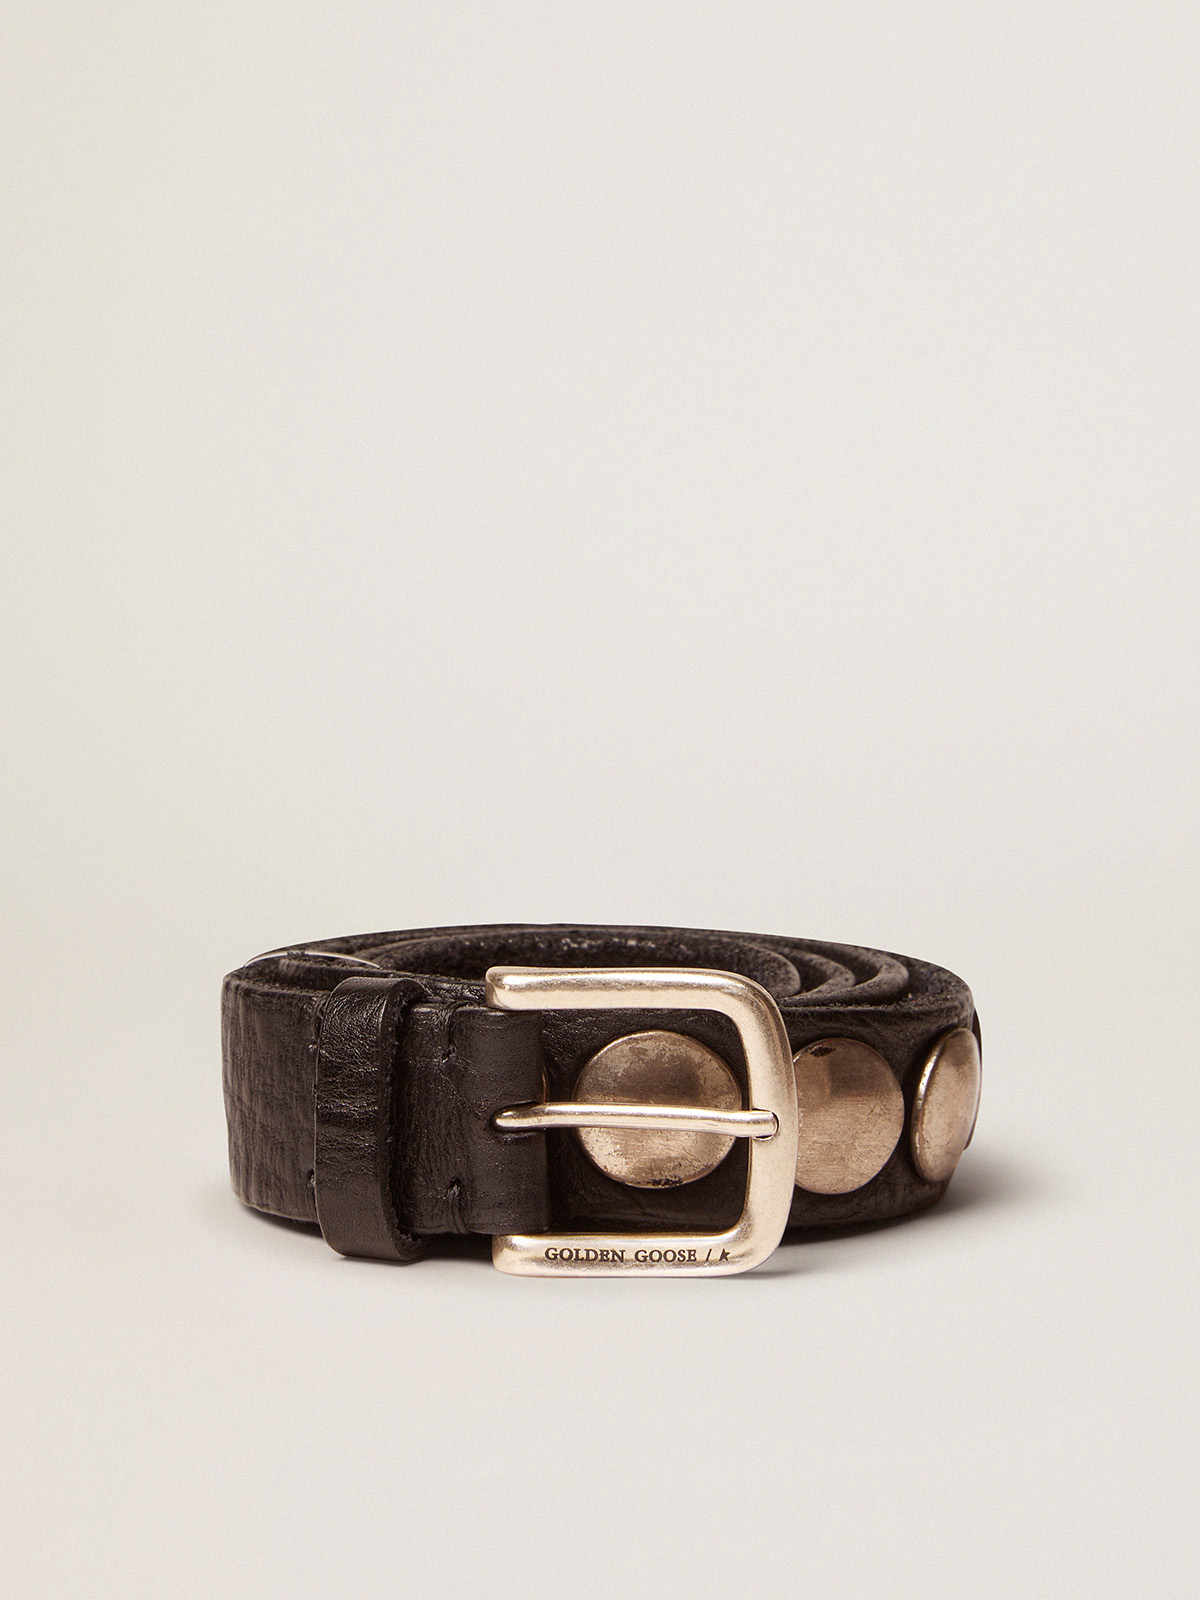 Limited Edition Louis Vuitton LV Dark Brown Leather belt, Belt Size 90/36